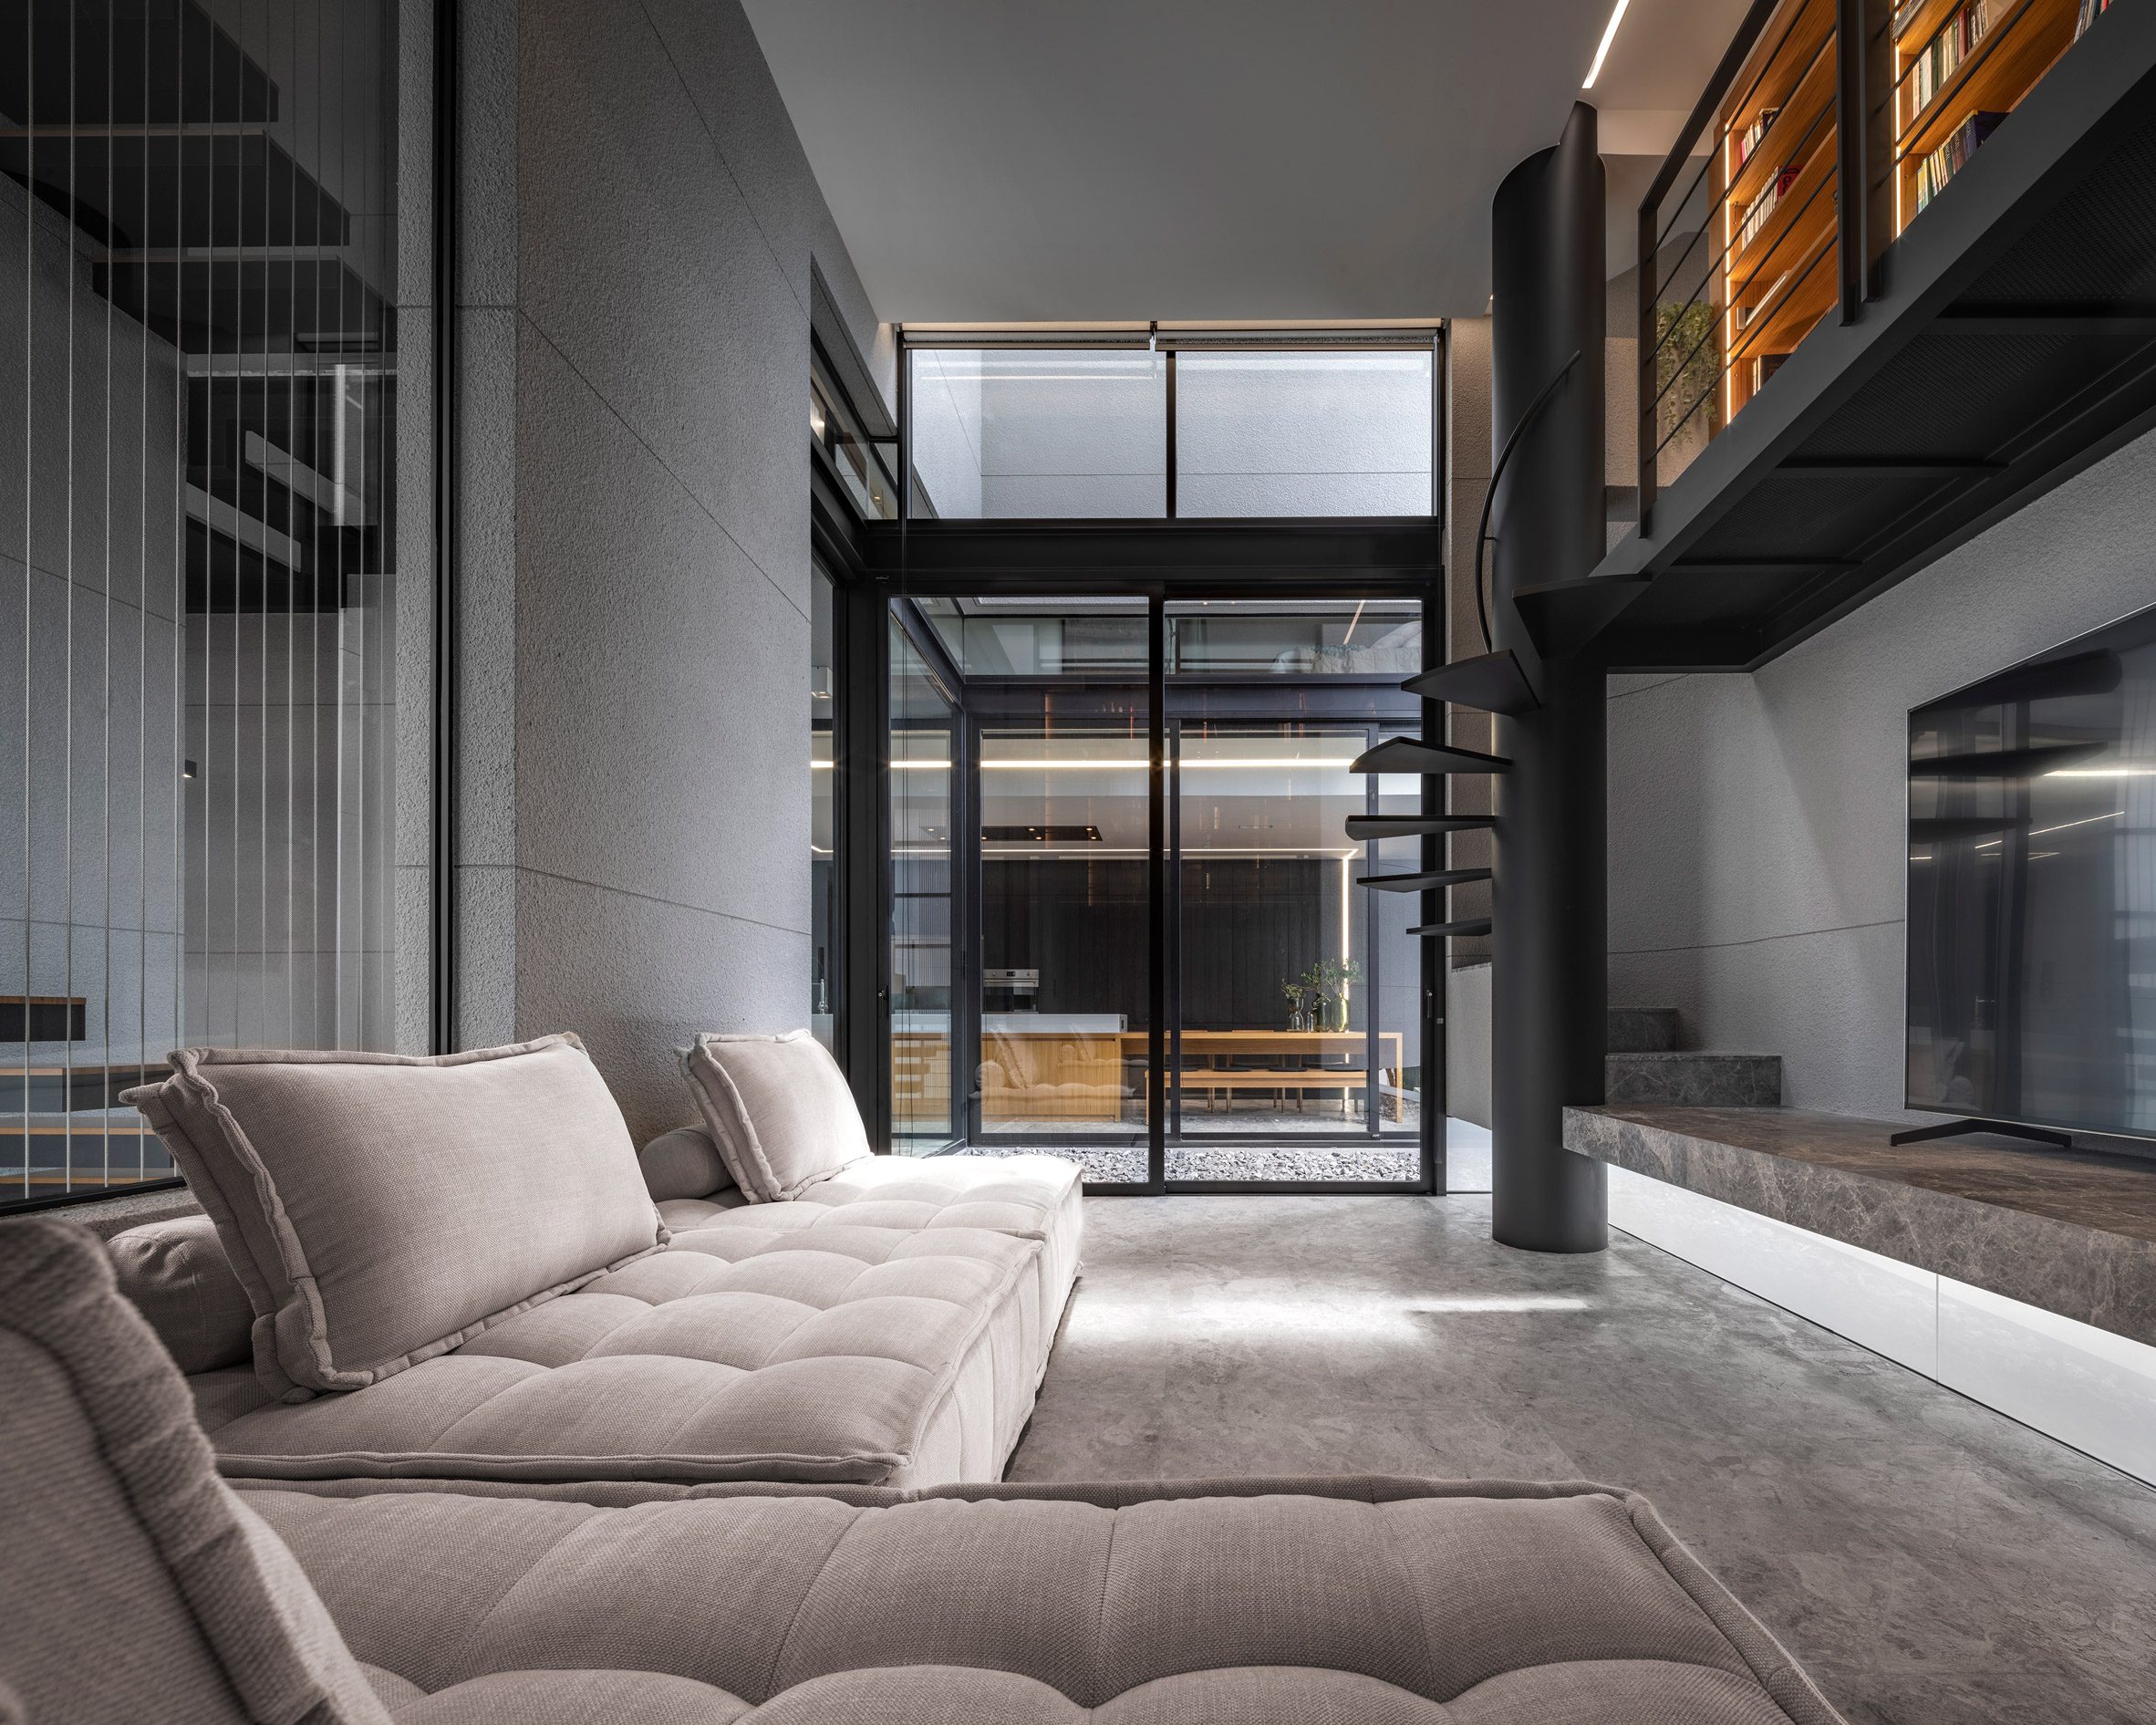 Living room with mezzanine study, 55 Sathorn house by Kuanchanok Pakavaleetorn Architects